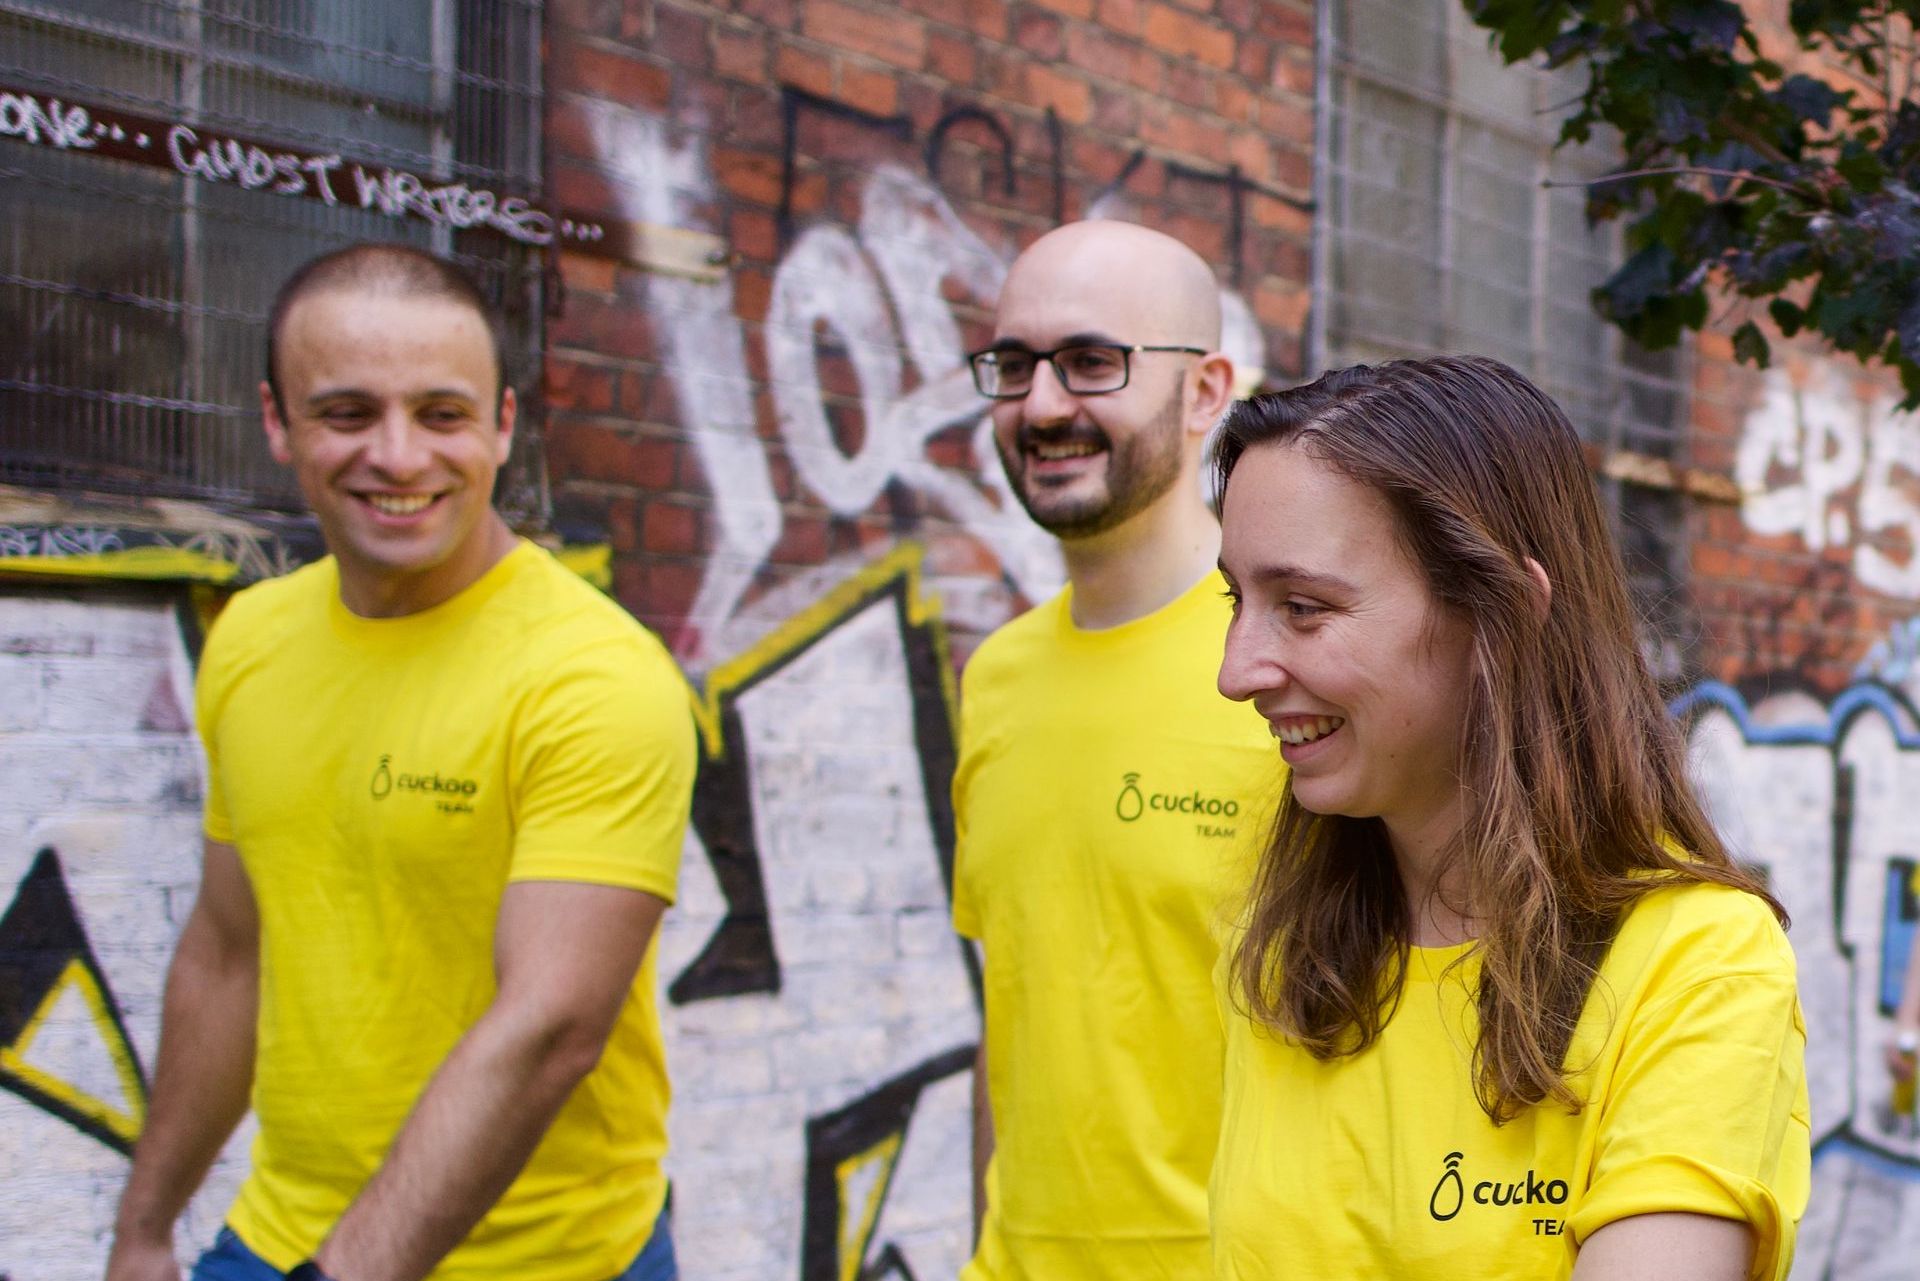 photo of Cuckoo employees wearing yellow